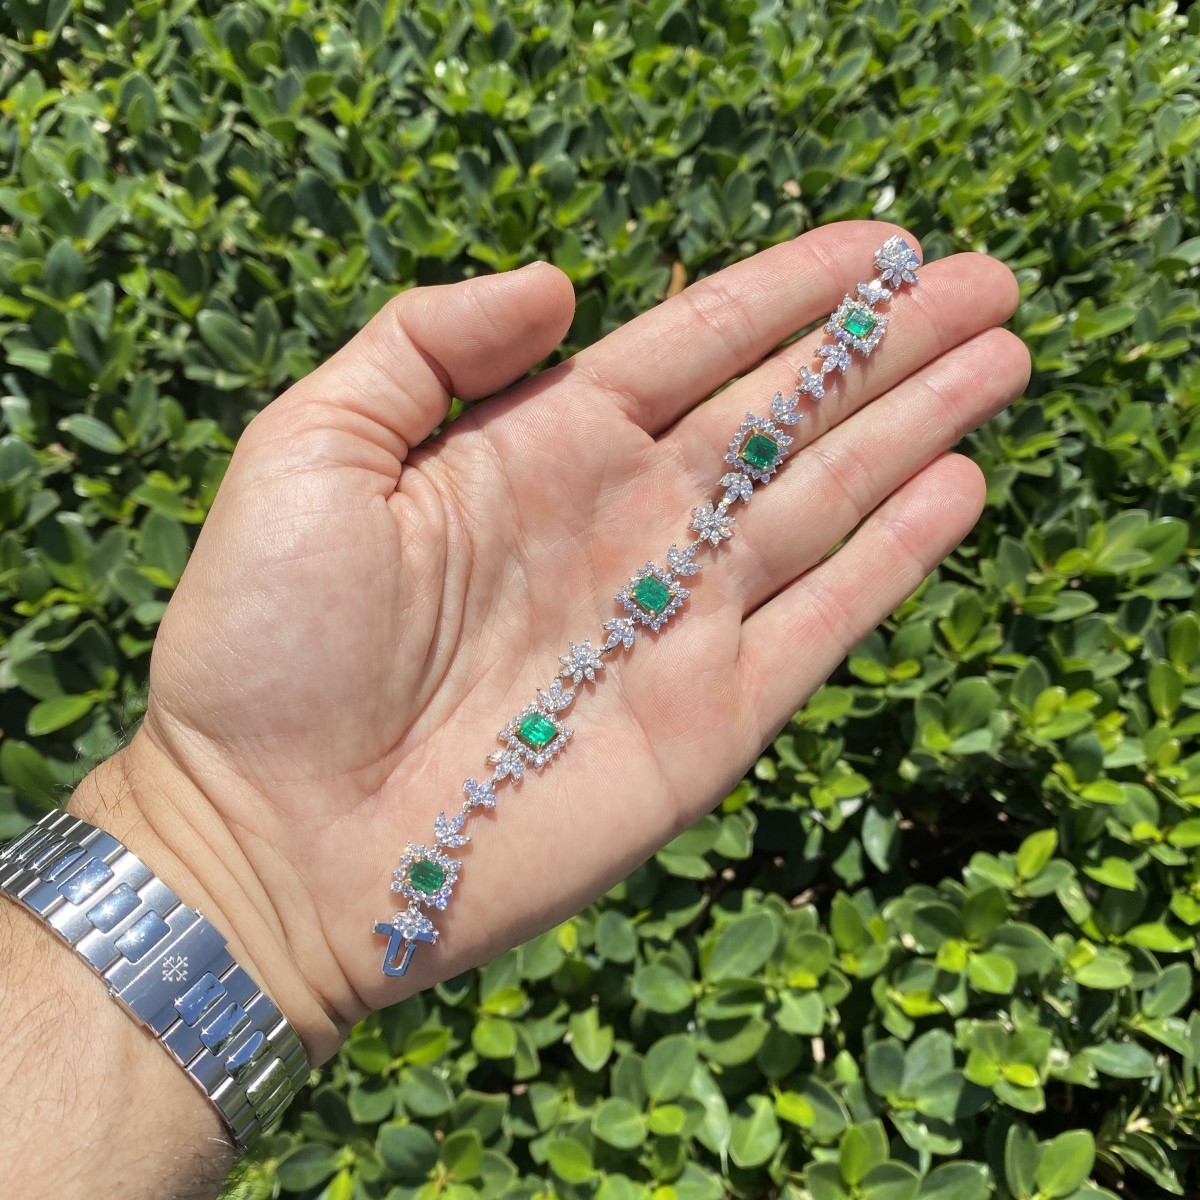 Diamond, Emerald and 18K Bracelet